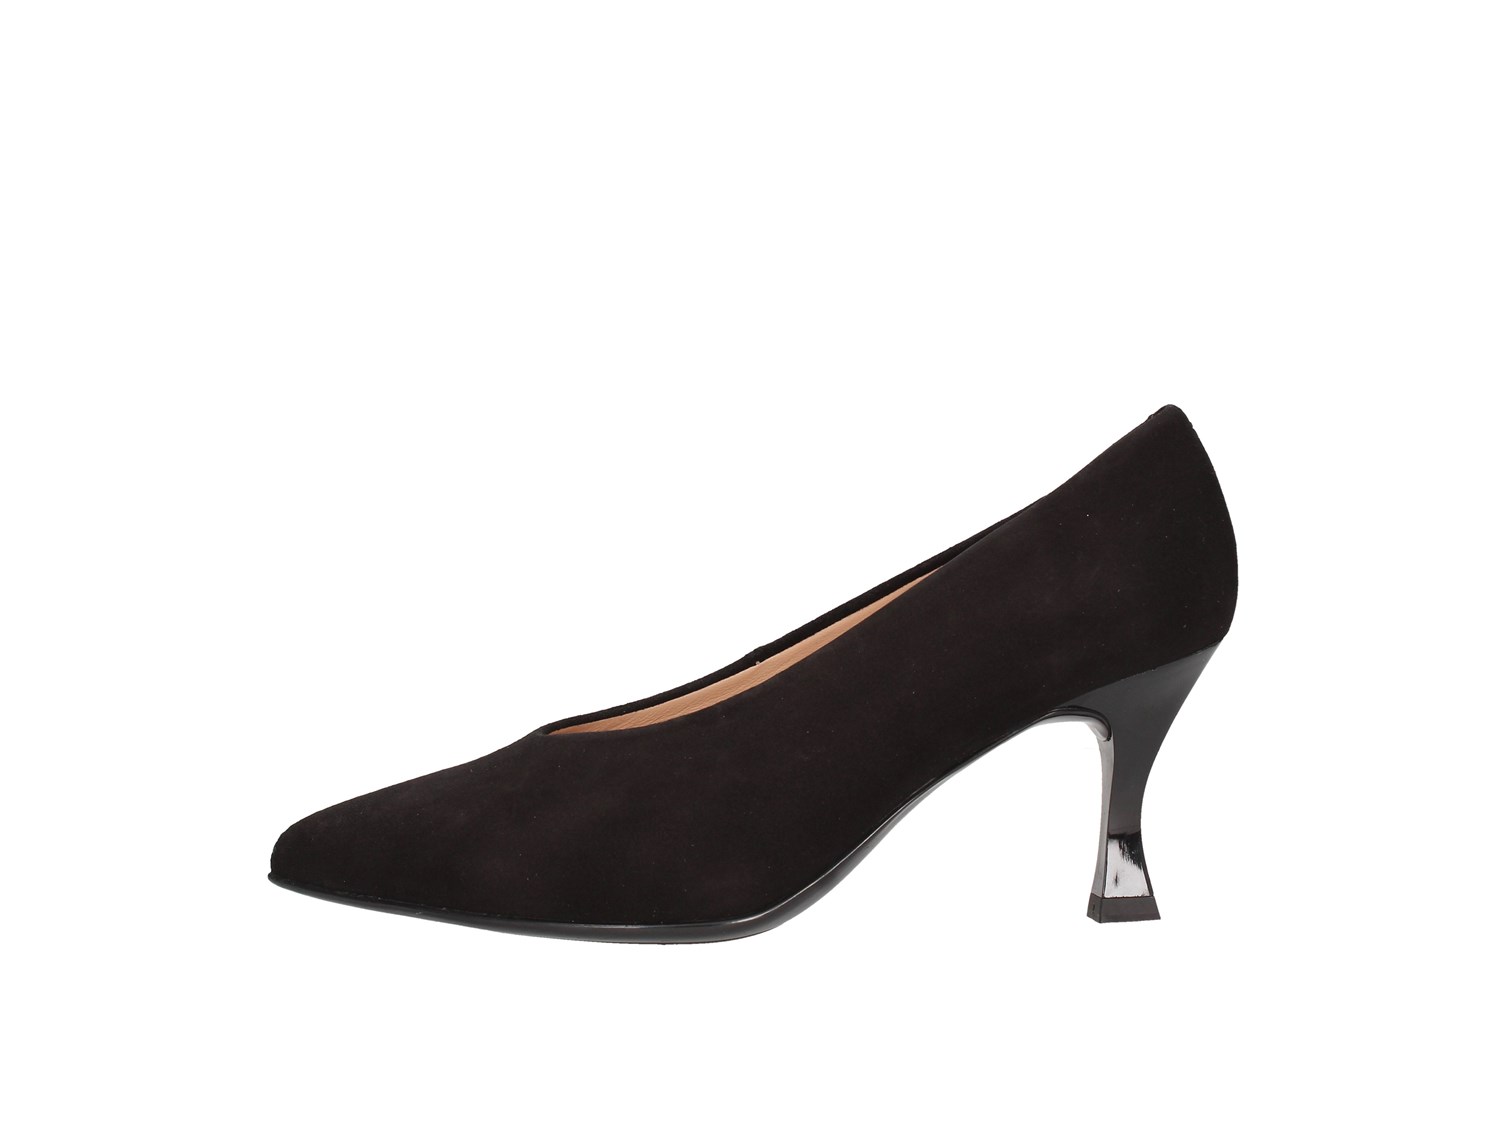 Unisa Kramp Black Shoes Women Heels'